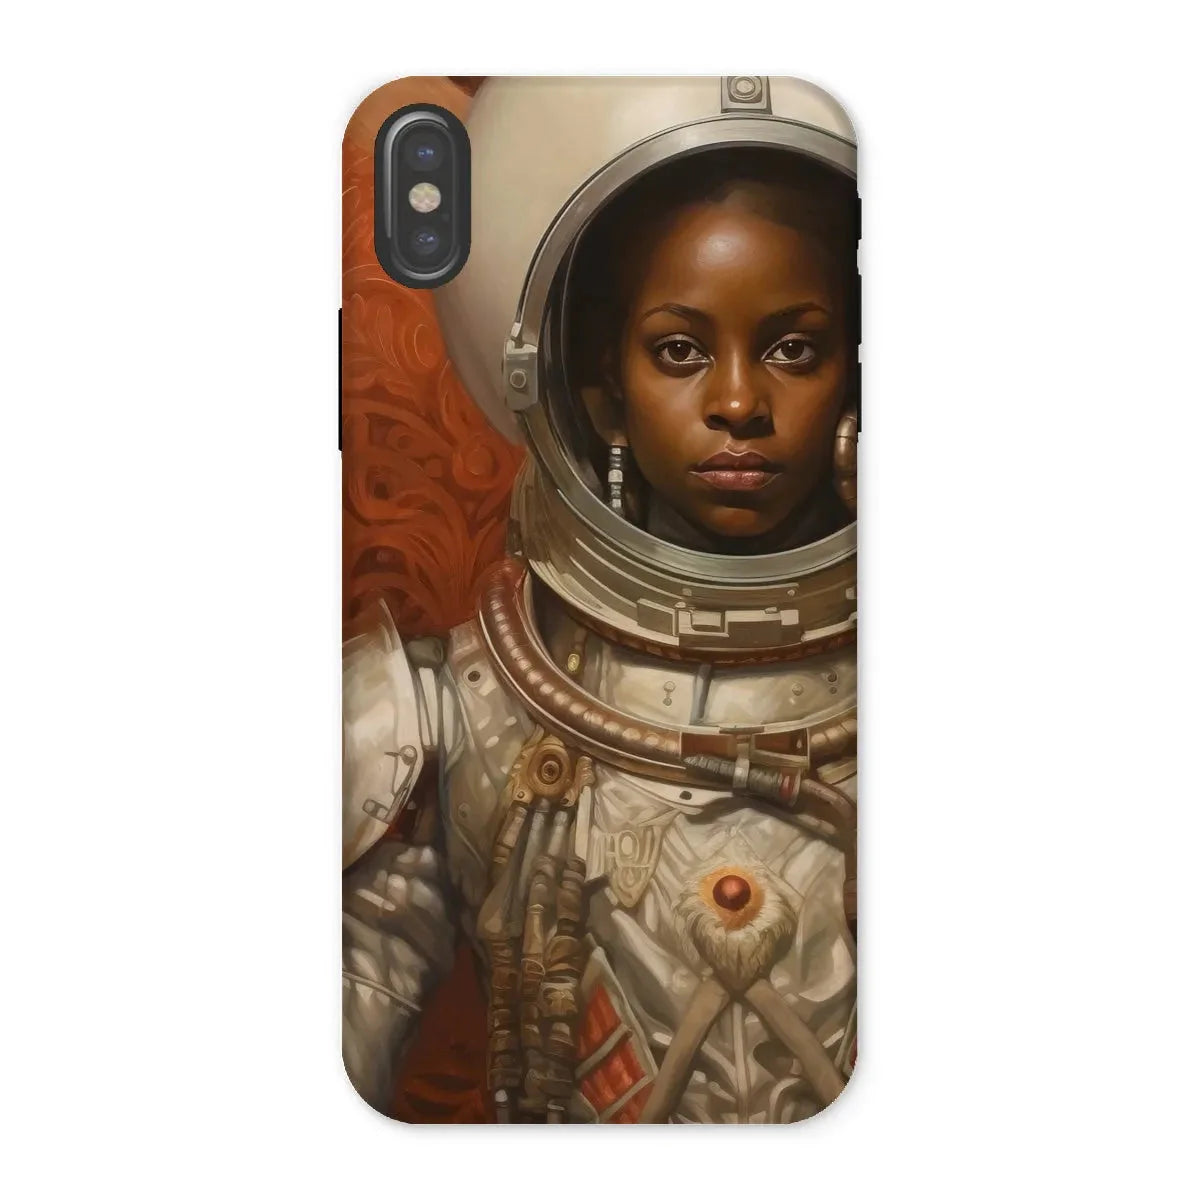 Ava The Lesbian Astronaut - Sapphic Aesthetic Phone Case - Iphone x / Matte - Mobile Phone Cases - Aesthetic Art